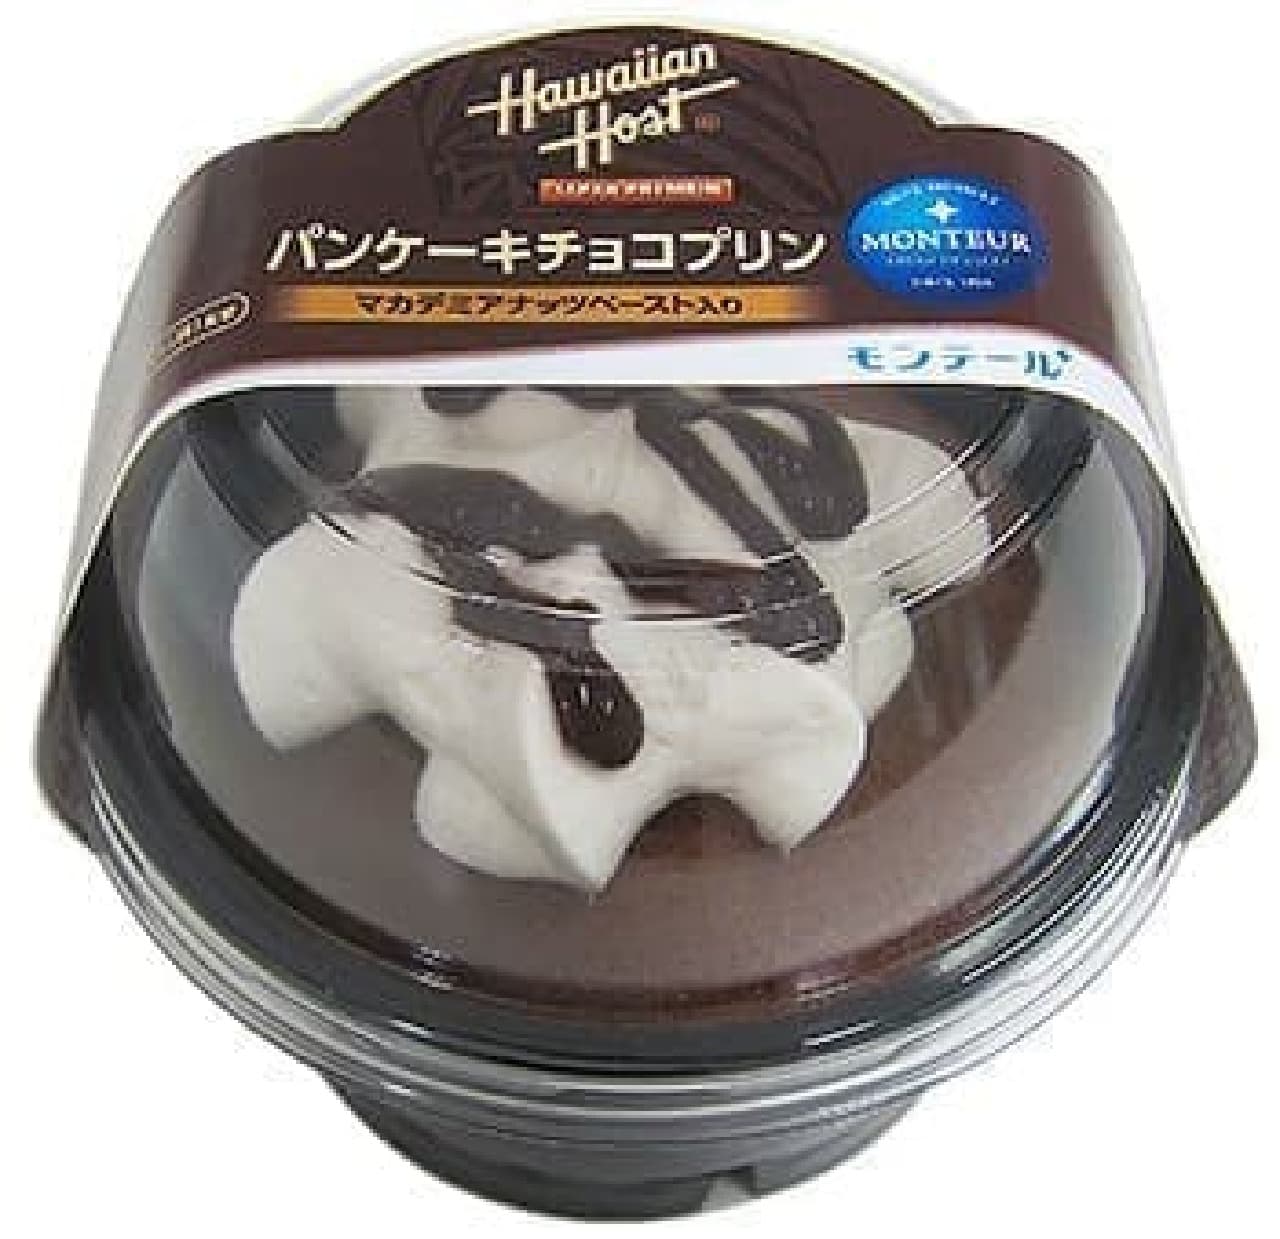 Sweets in collaboration with Hawaii's popular chocolate brand "Hawaiian Horst"